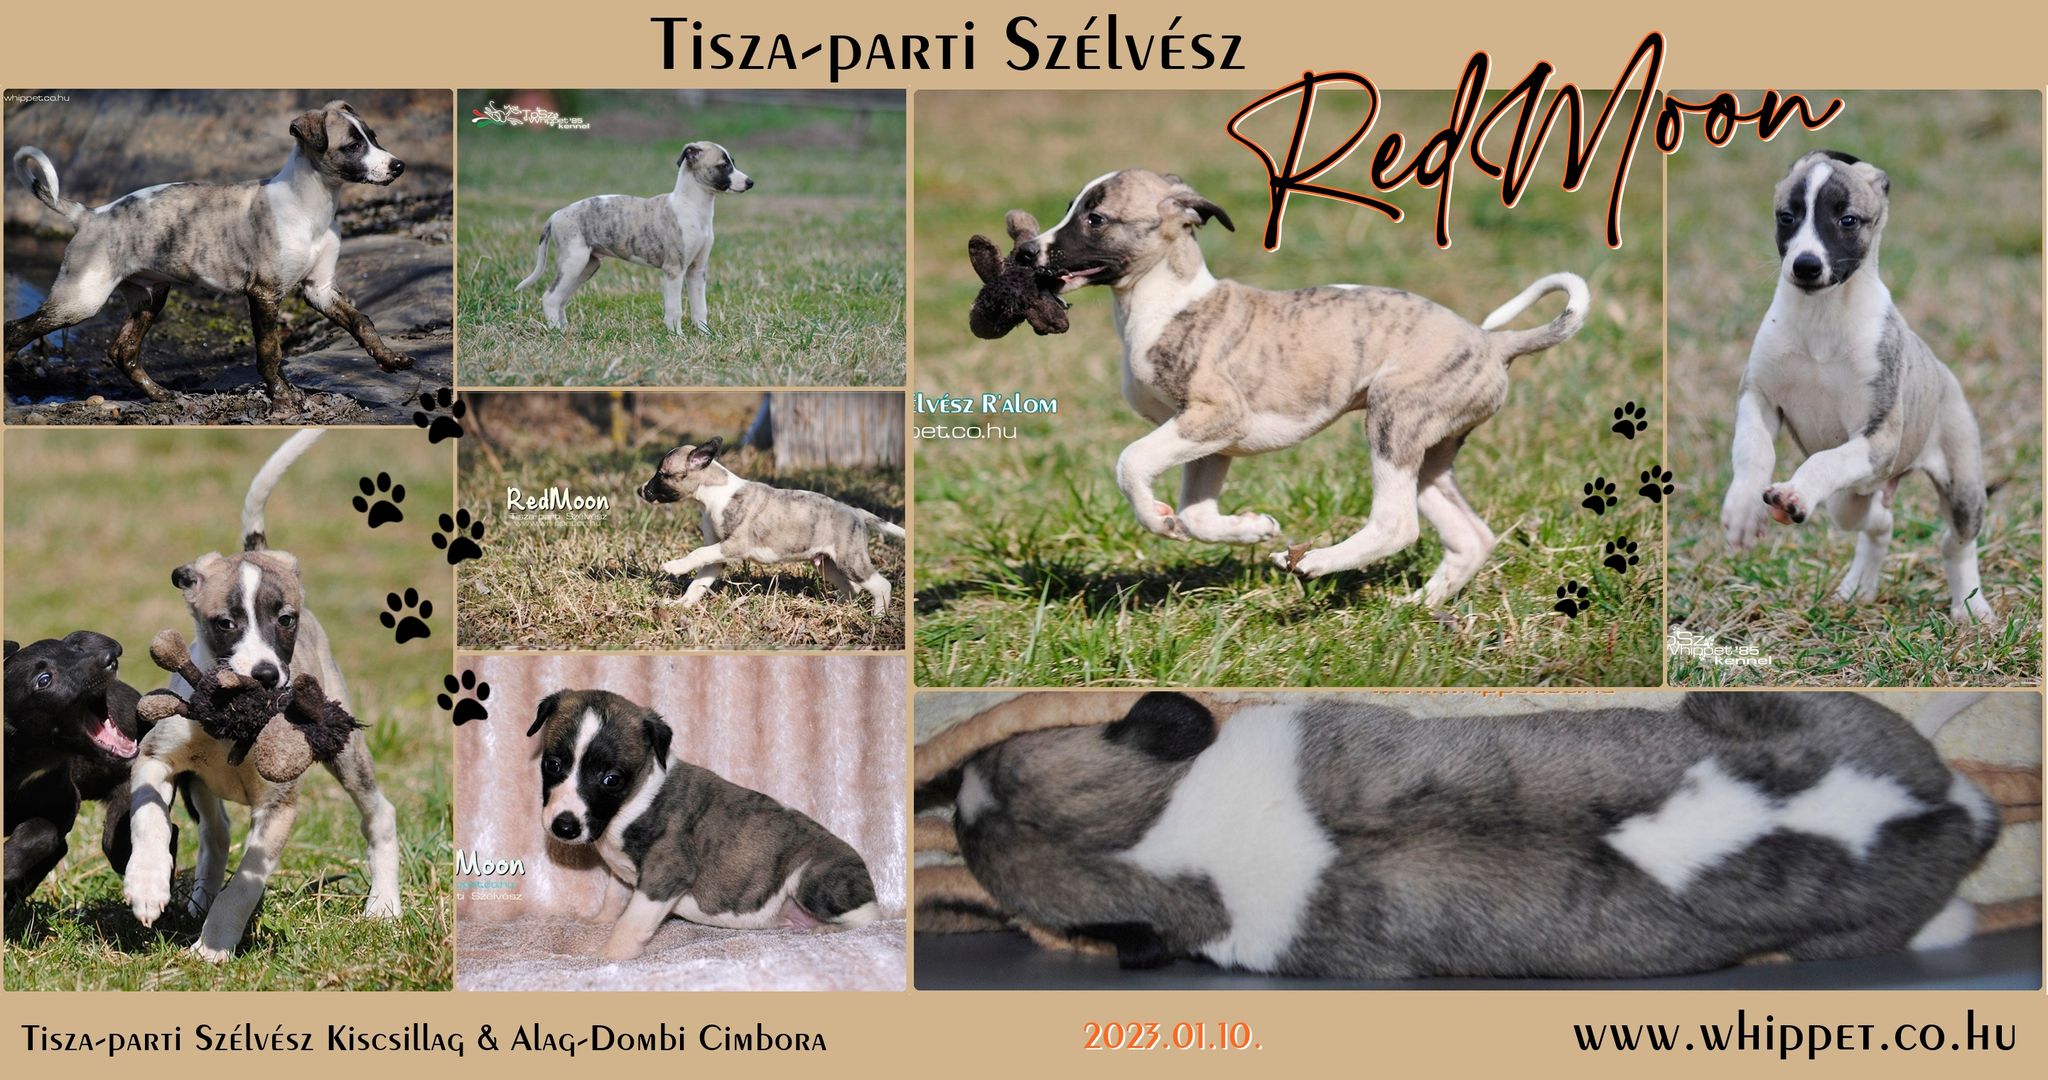 Tisza-parti Szélvész RedMoon whippet puppy for sale